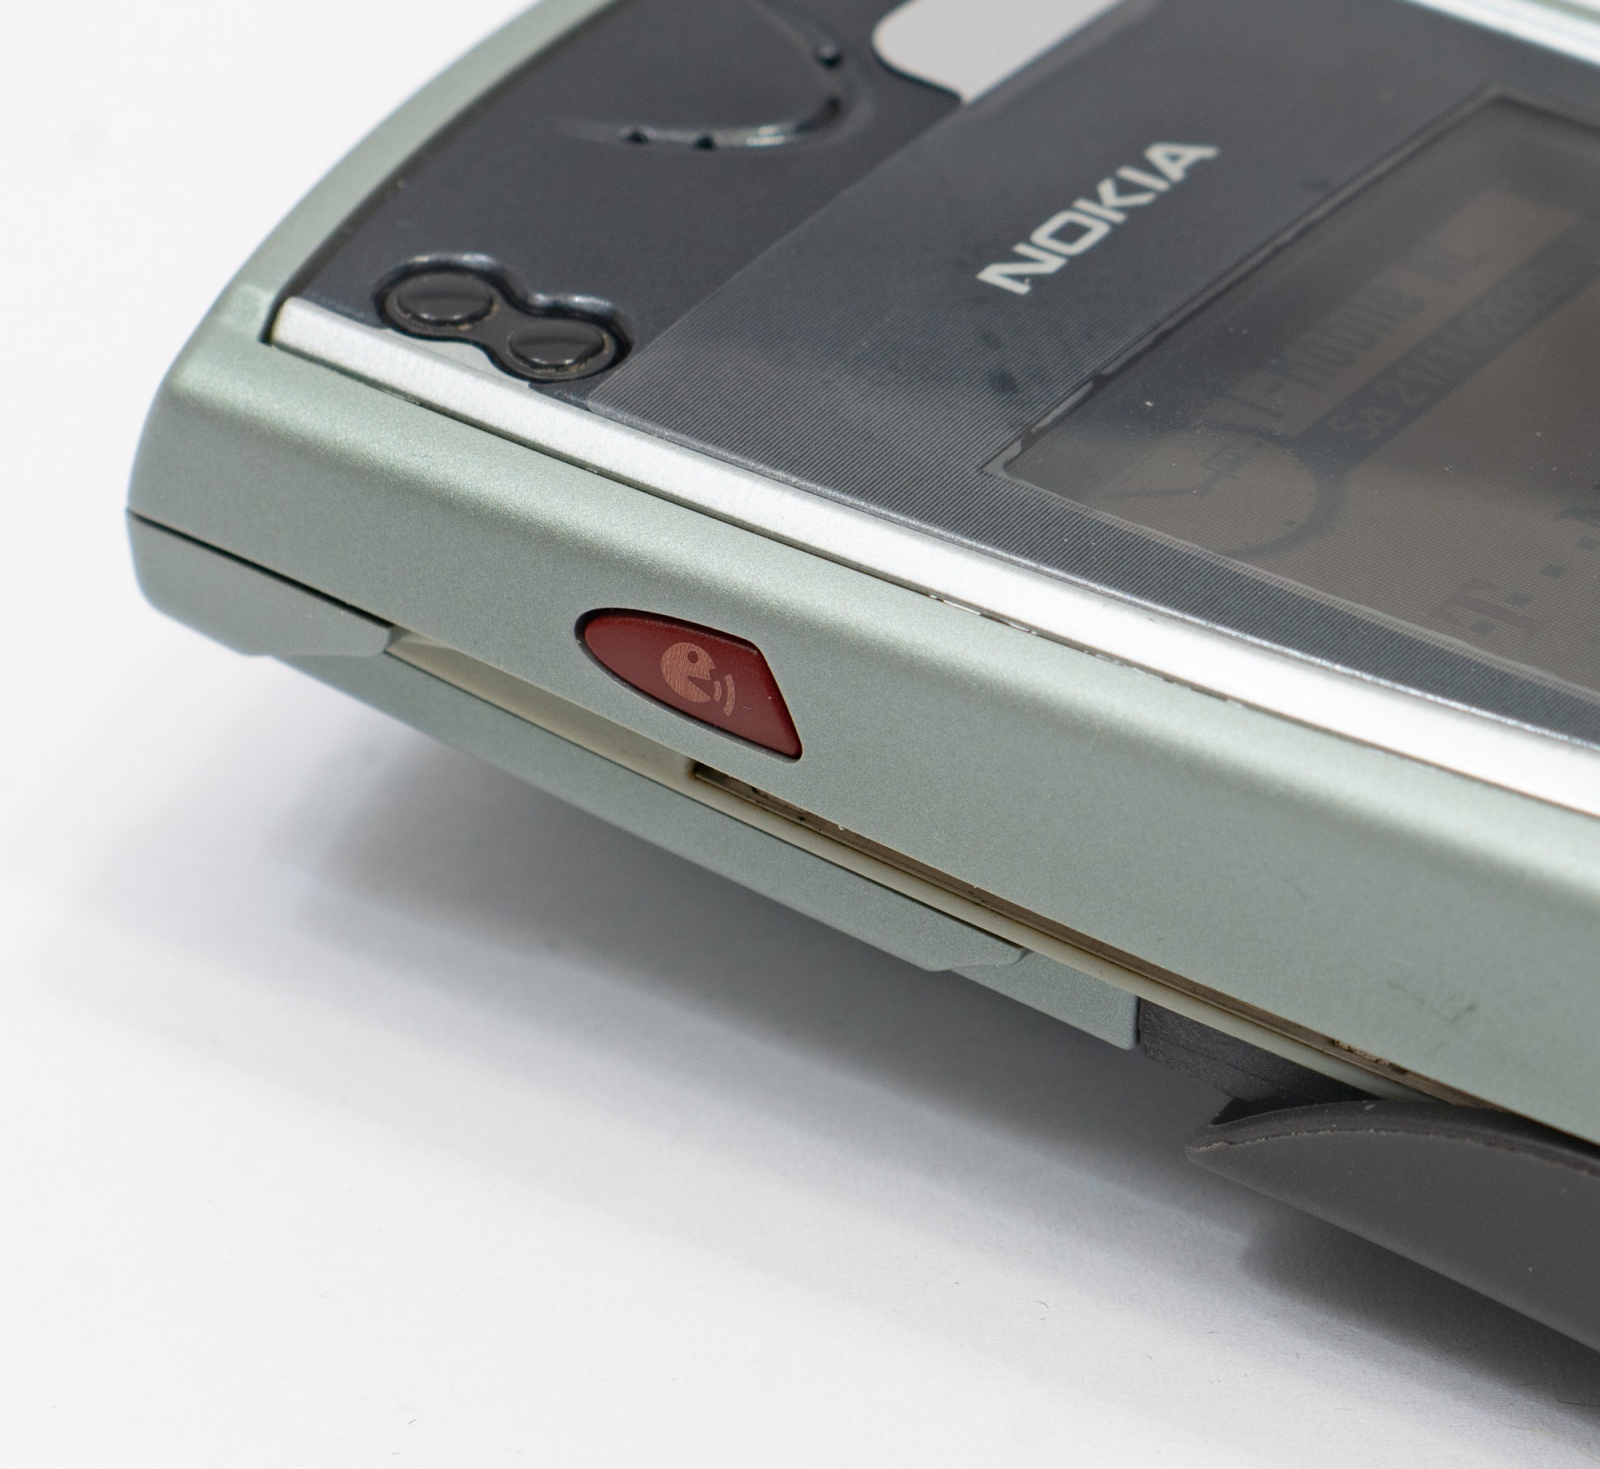 Nokia 7650 и начало эпохи смартфонов - 16